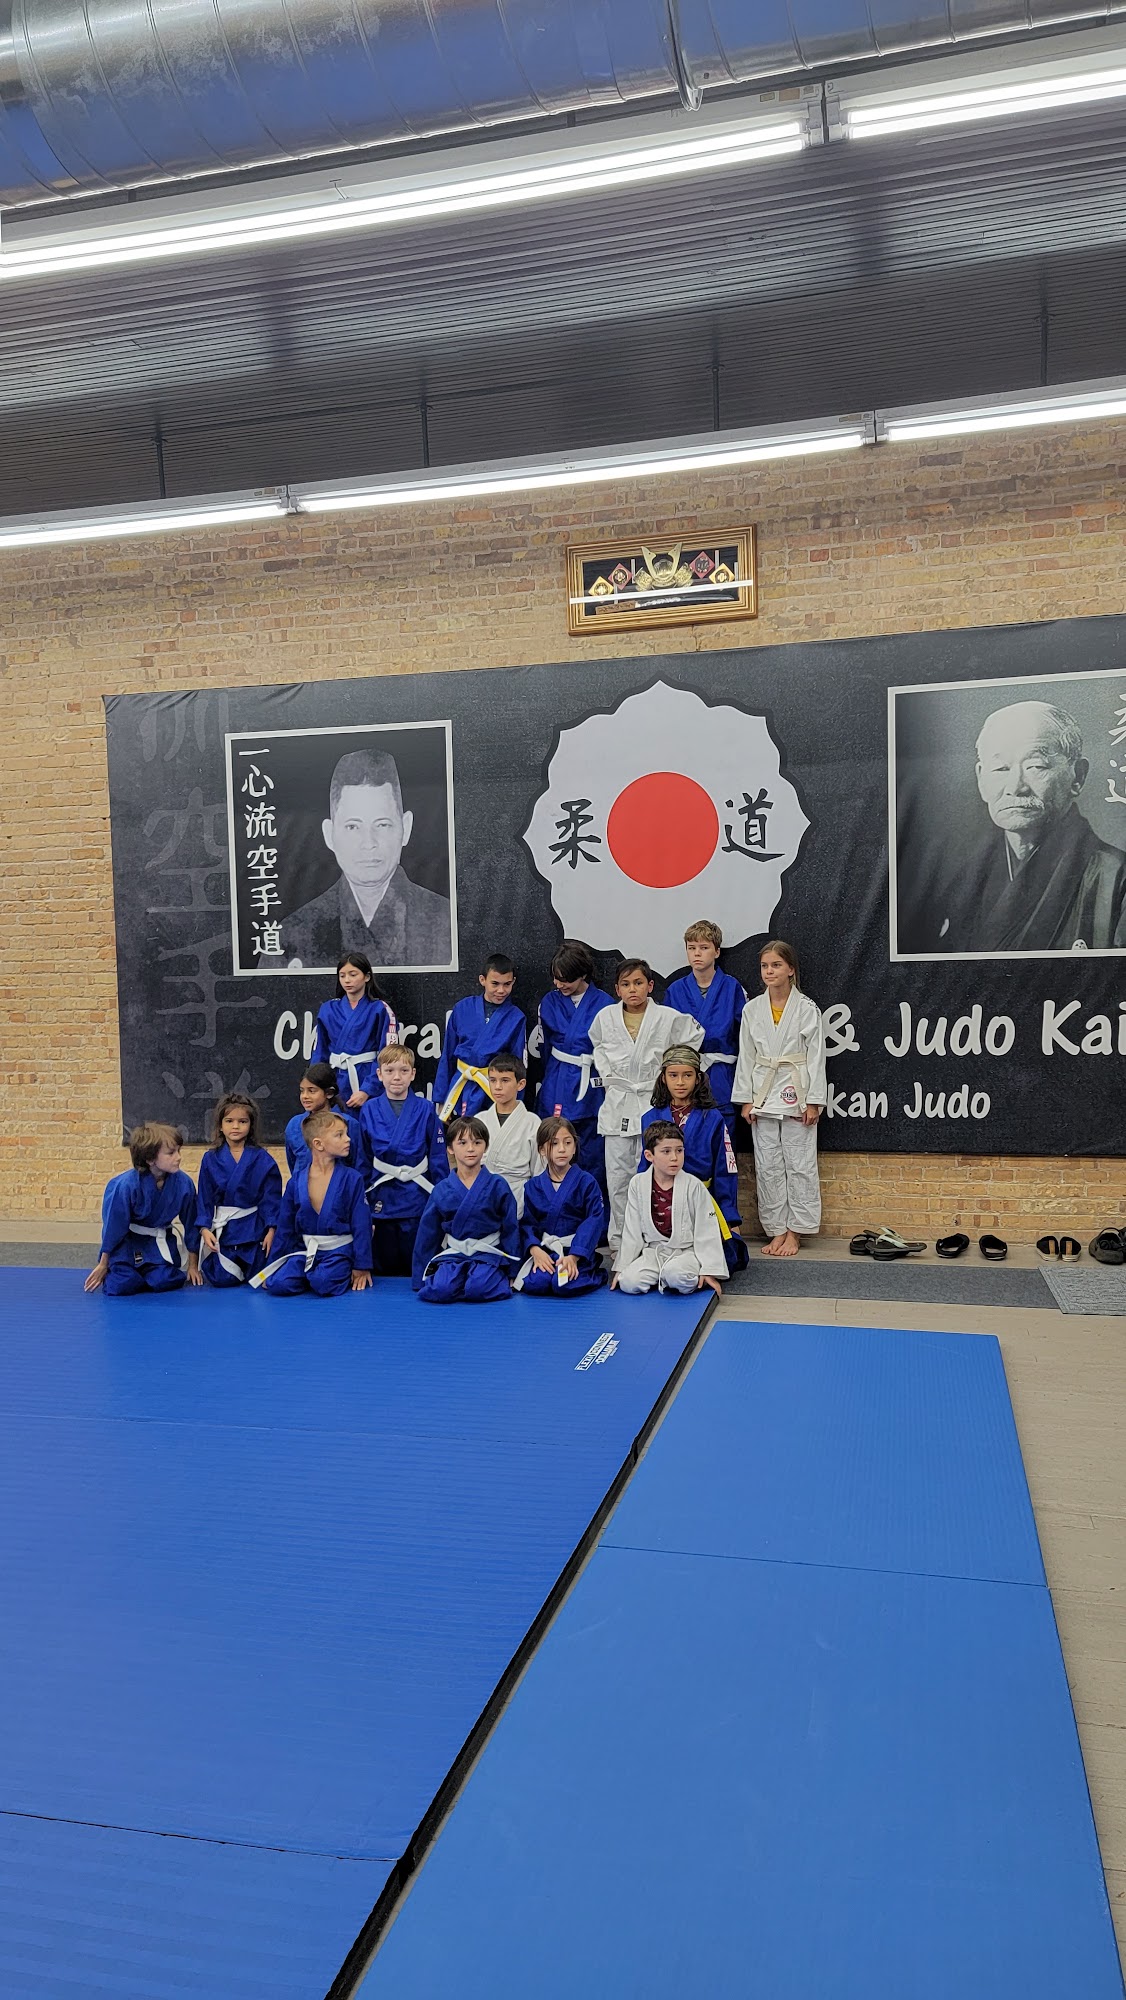 Chikarakogeki Karate & Judo Kai 14839 Main St, Alachua Florida 32615